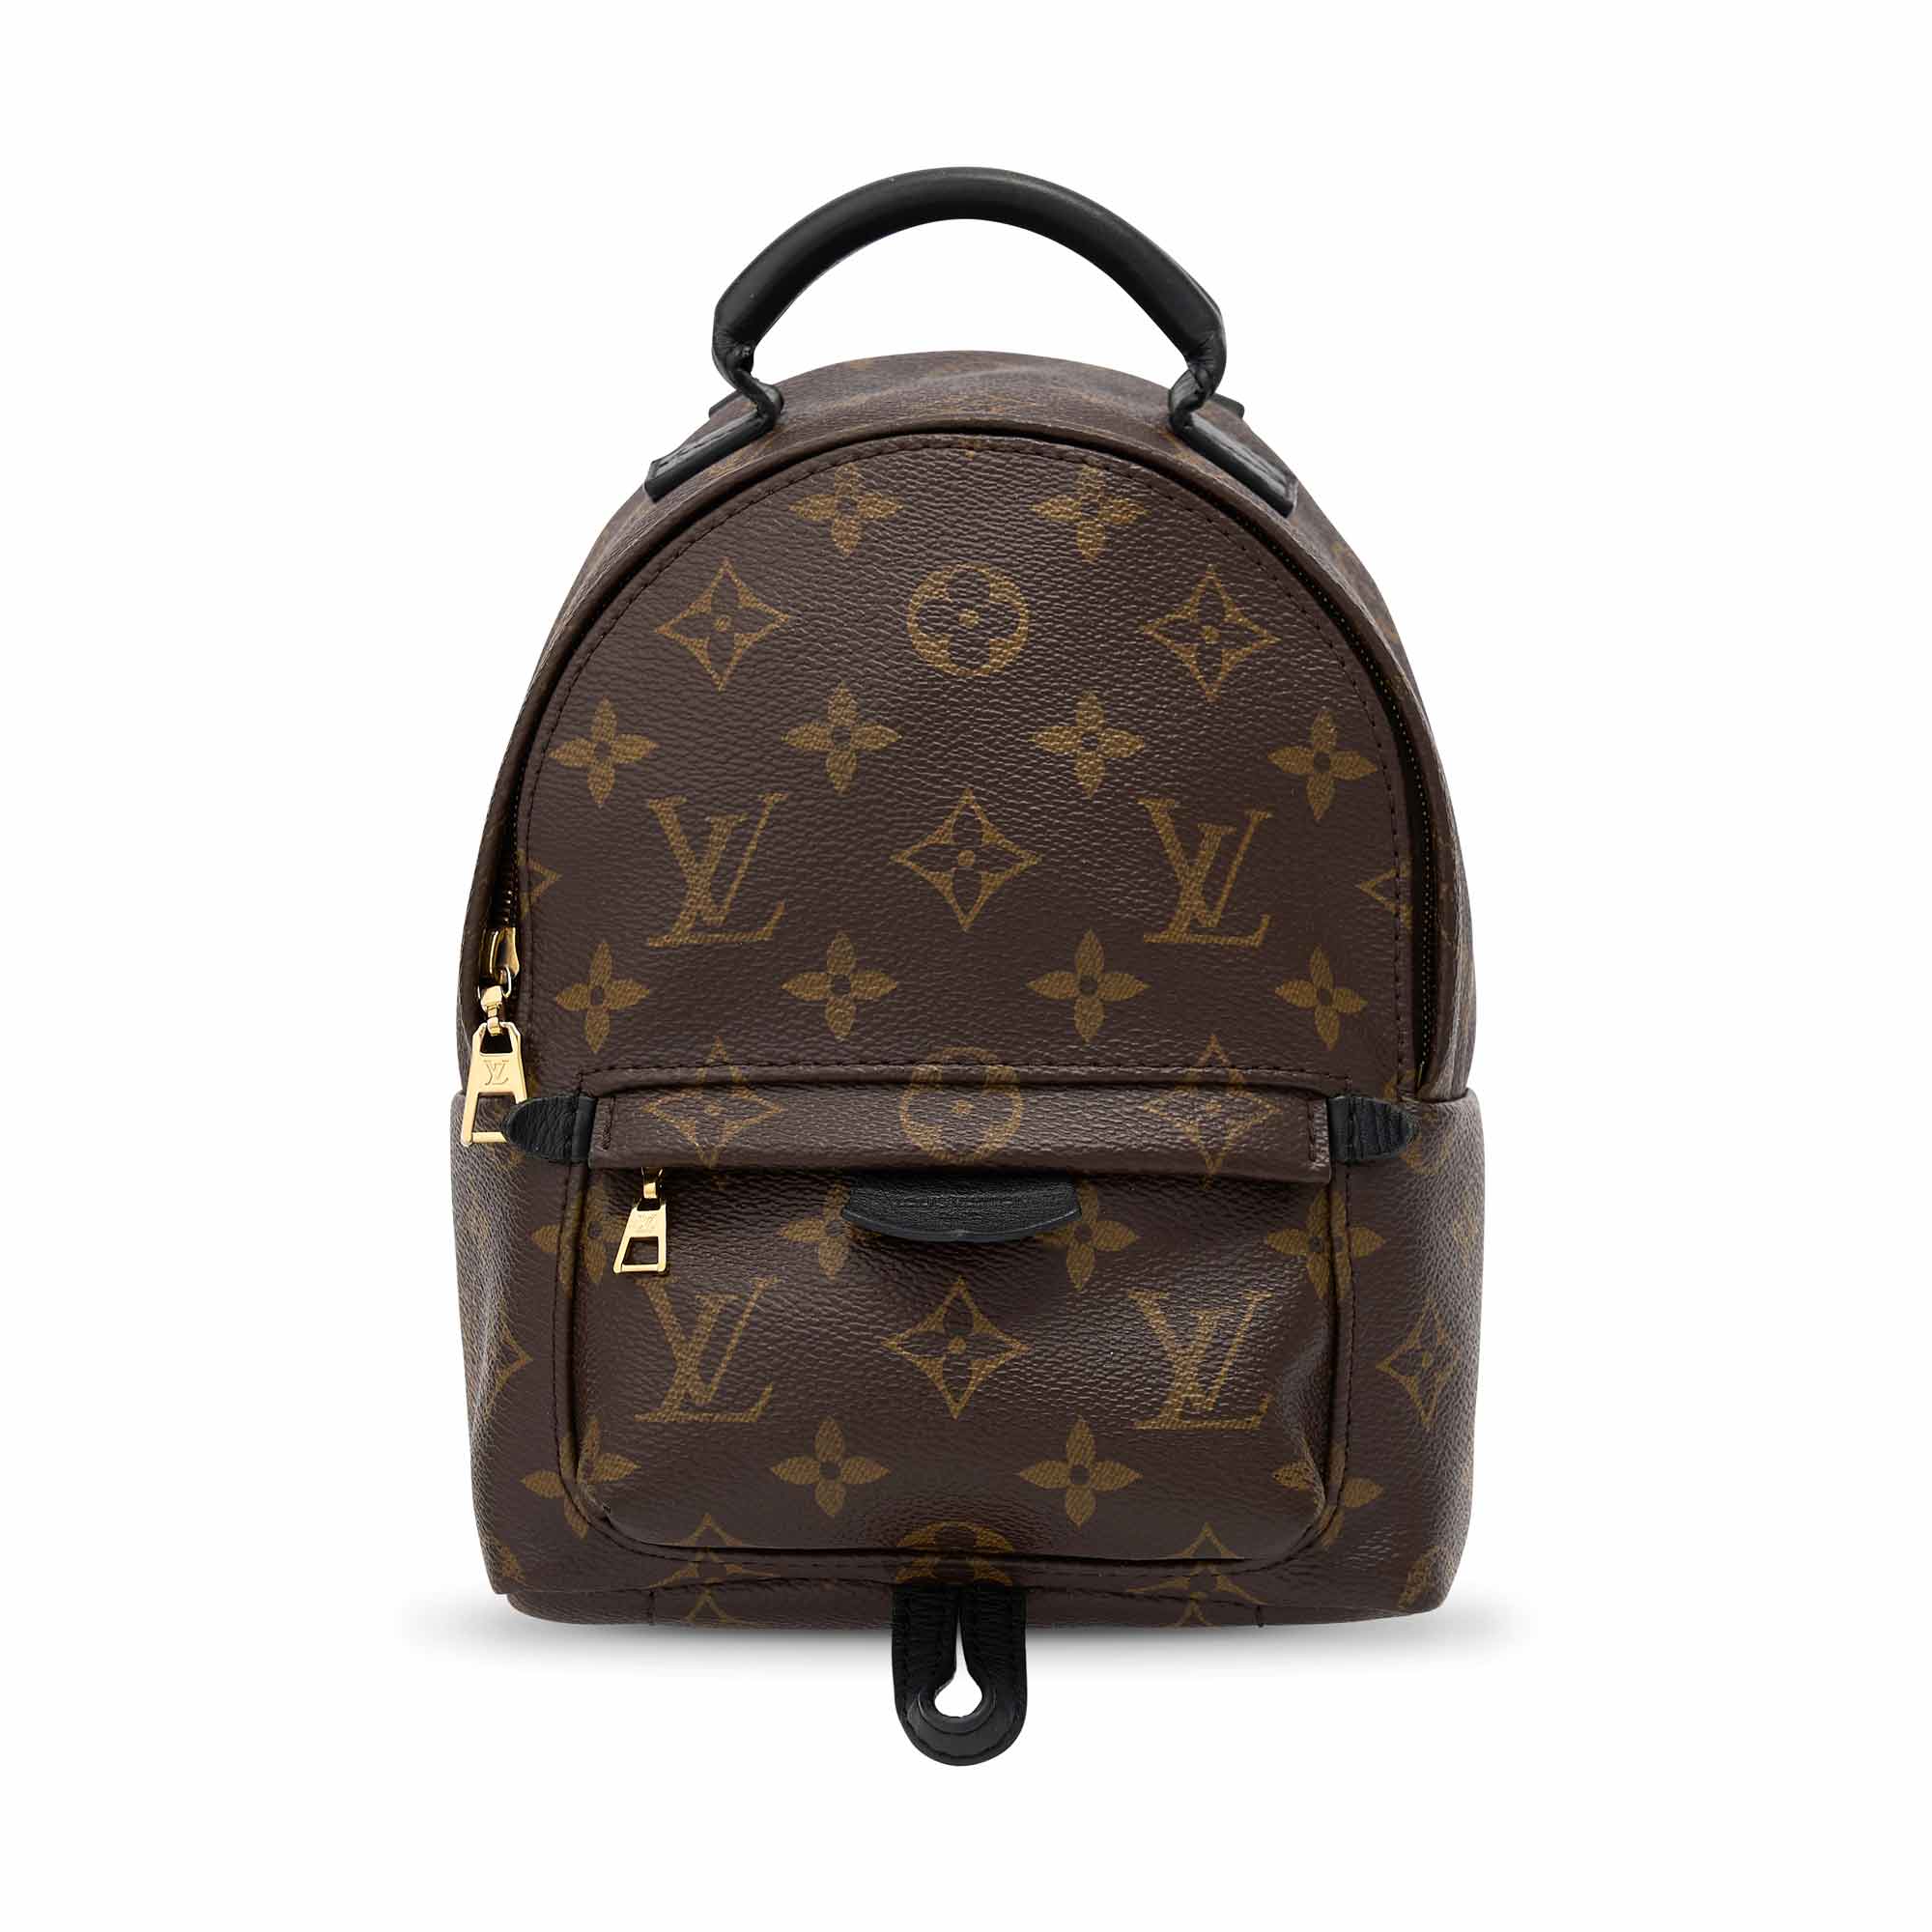 Palm Springs Backpack Mini, Rent Louis Vuitton Handbag